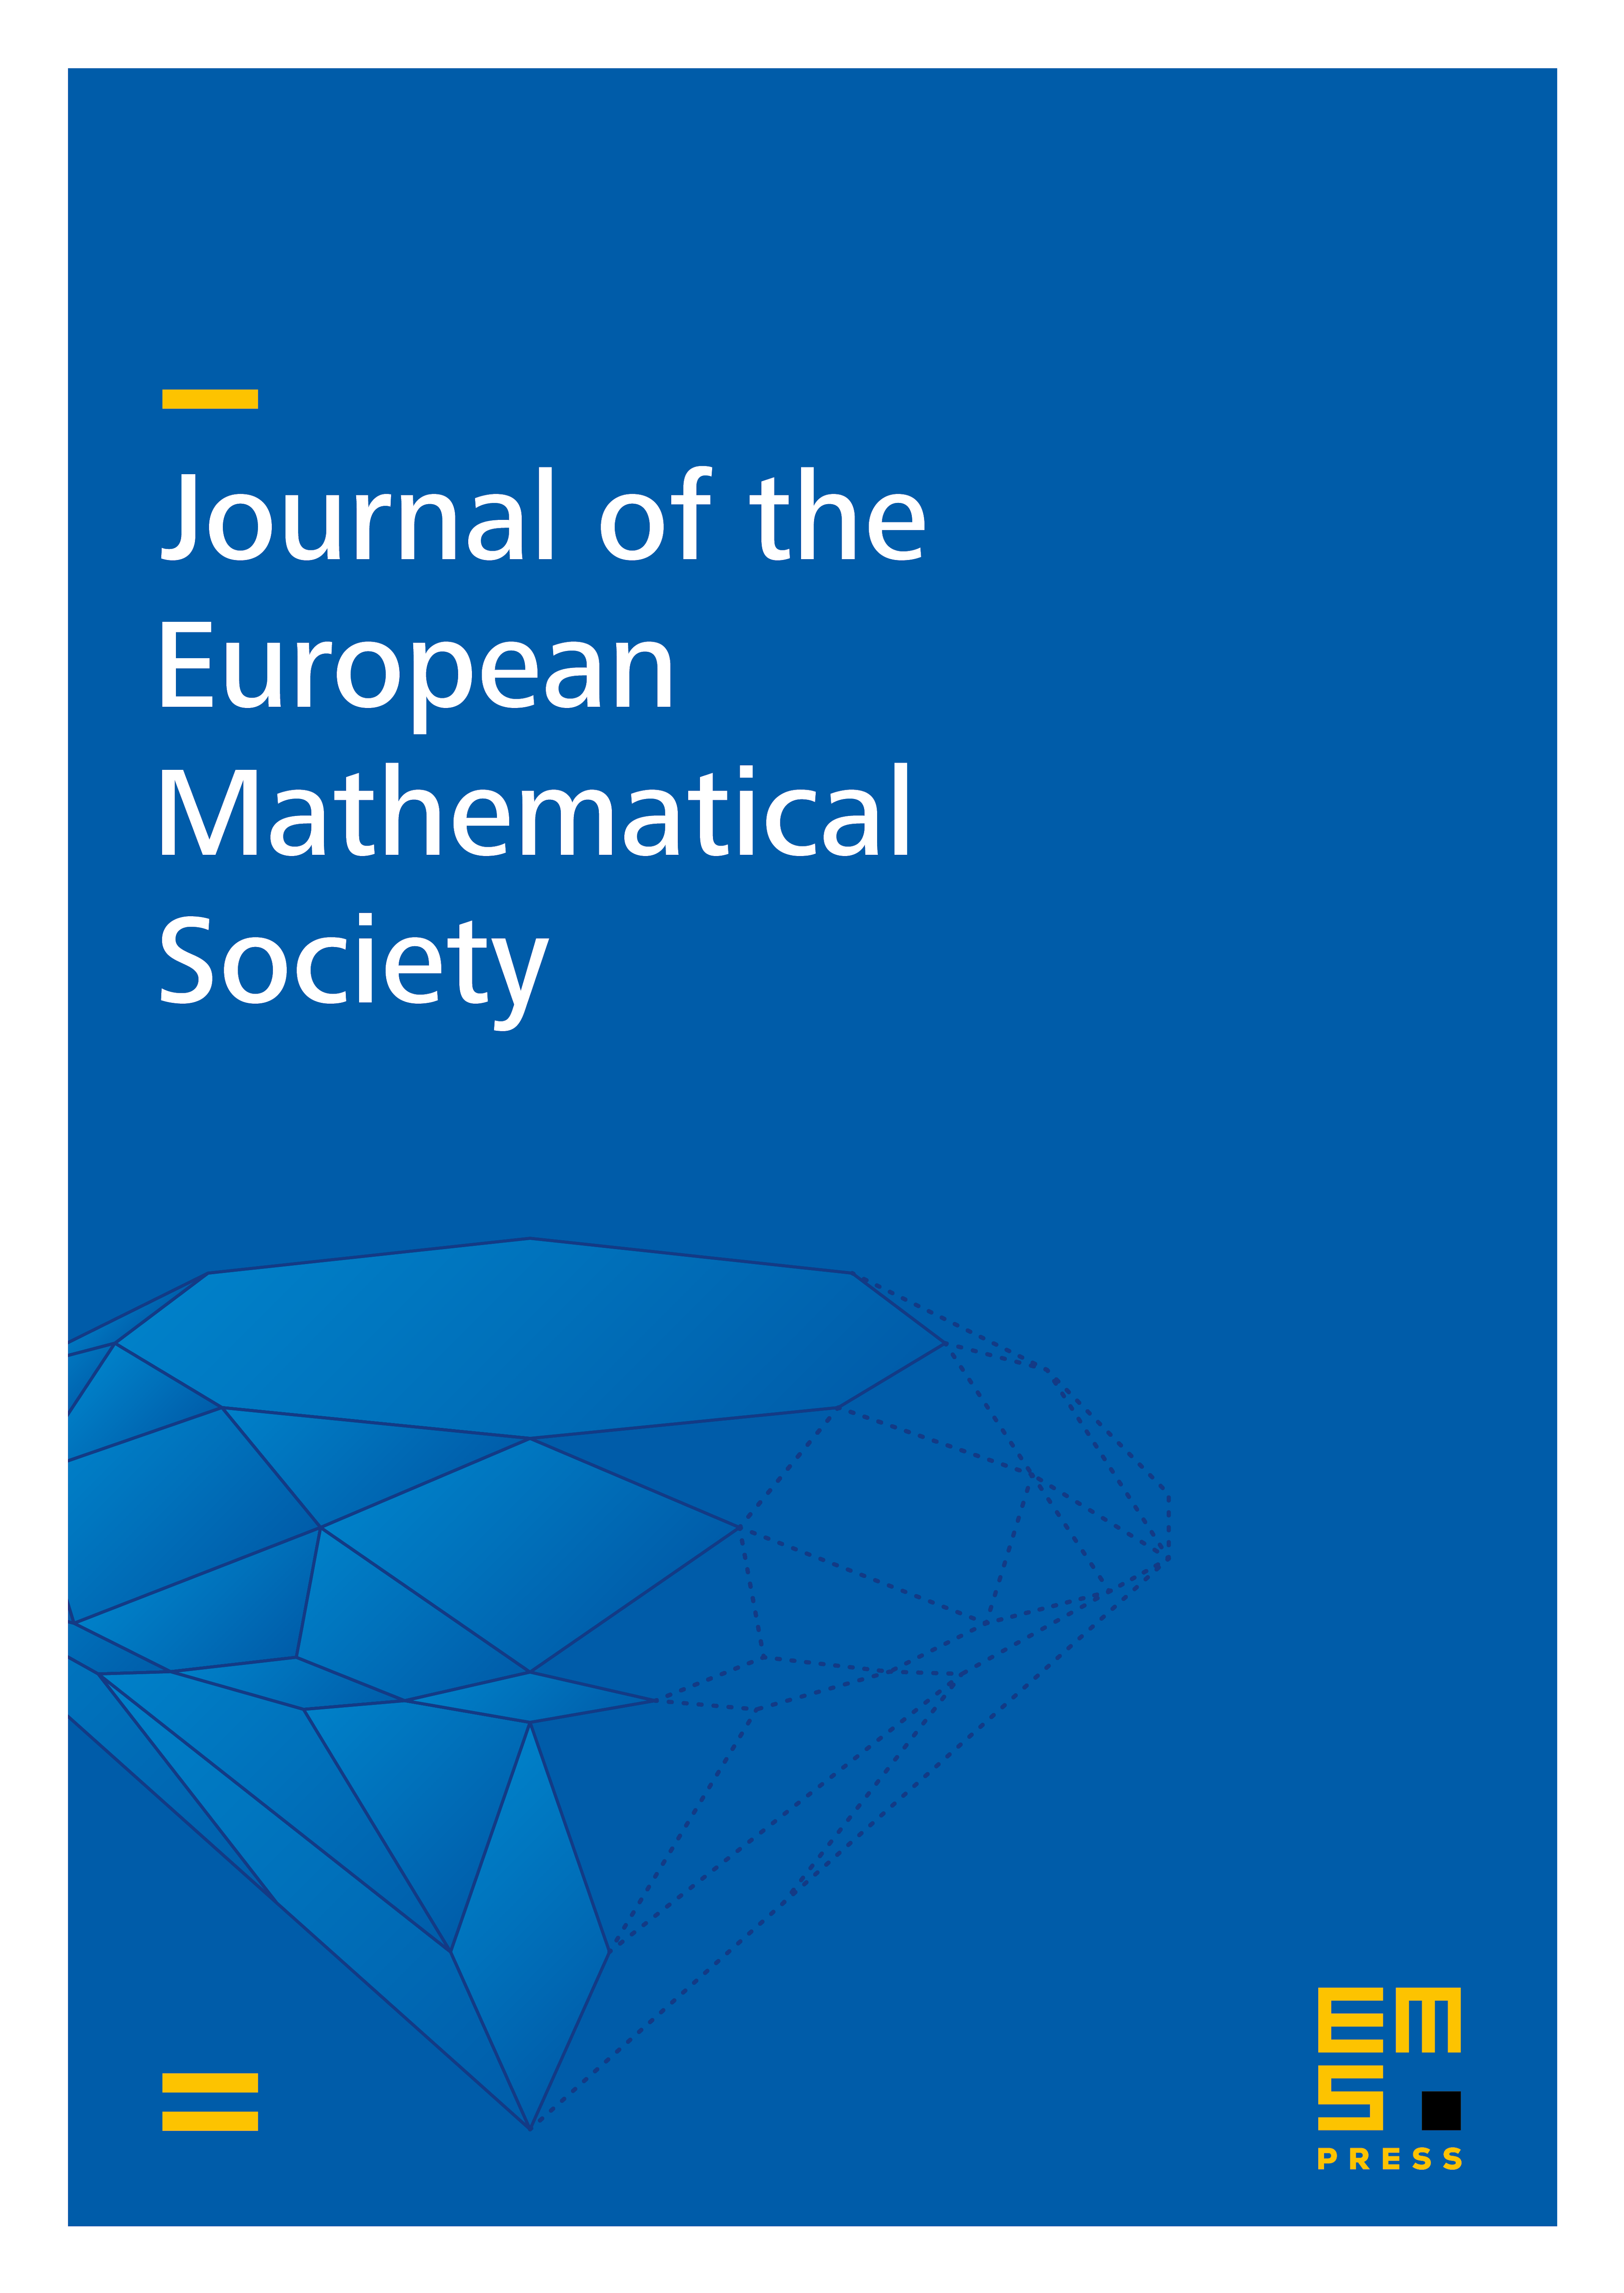 Erratum: J. Eur. Math. Soc. 1, 199-235 (1999) cover